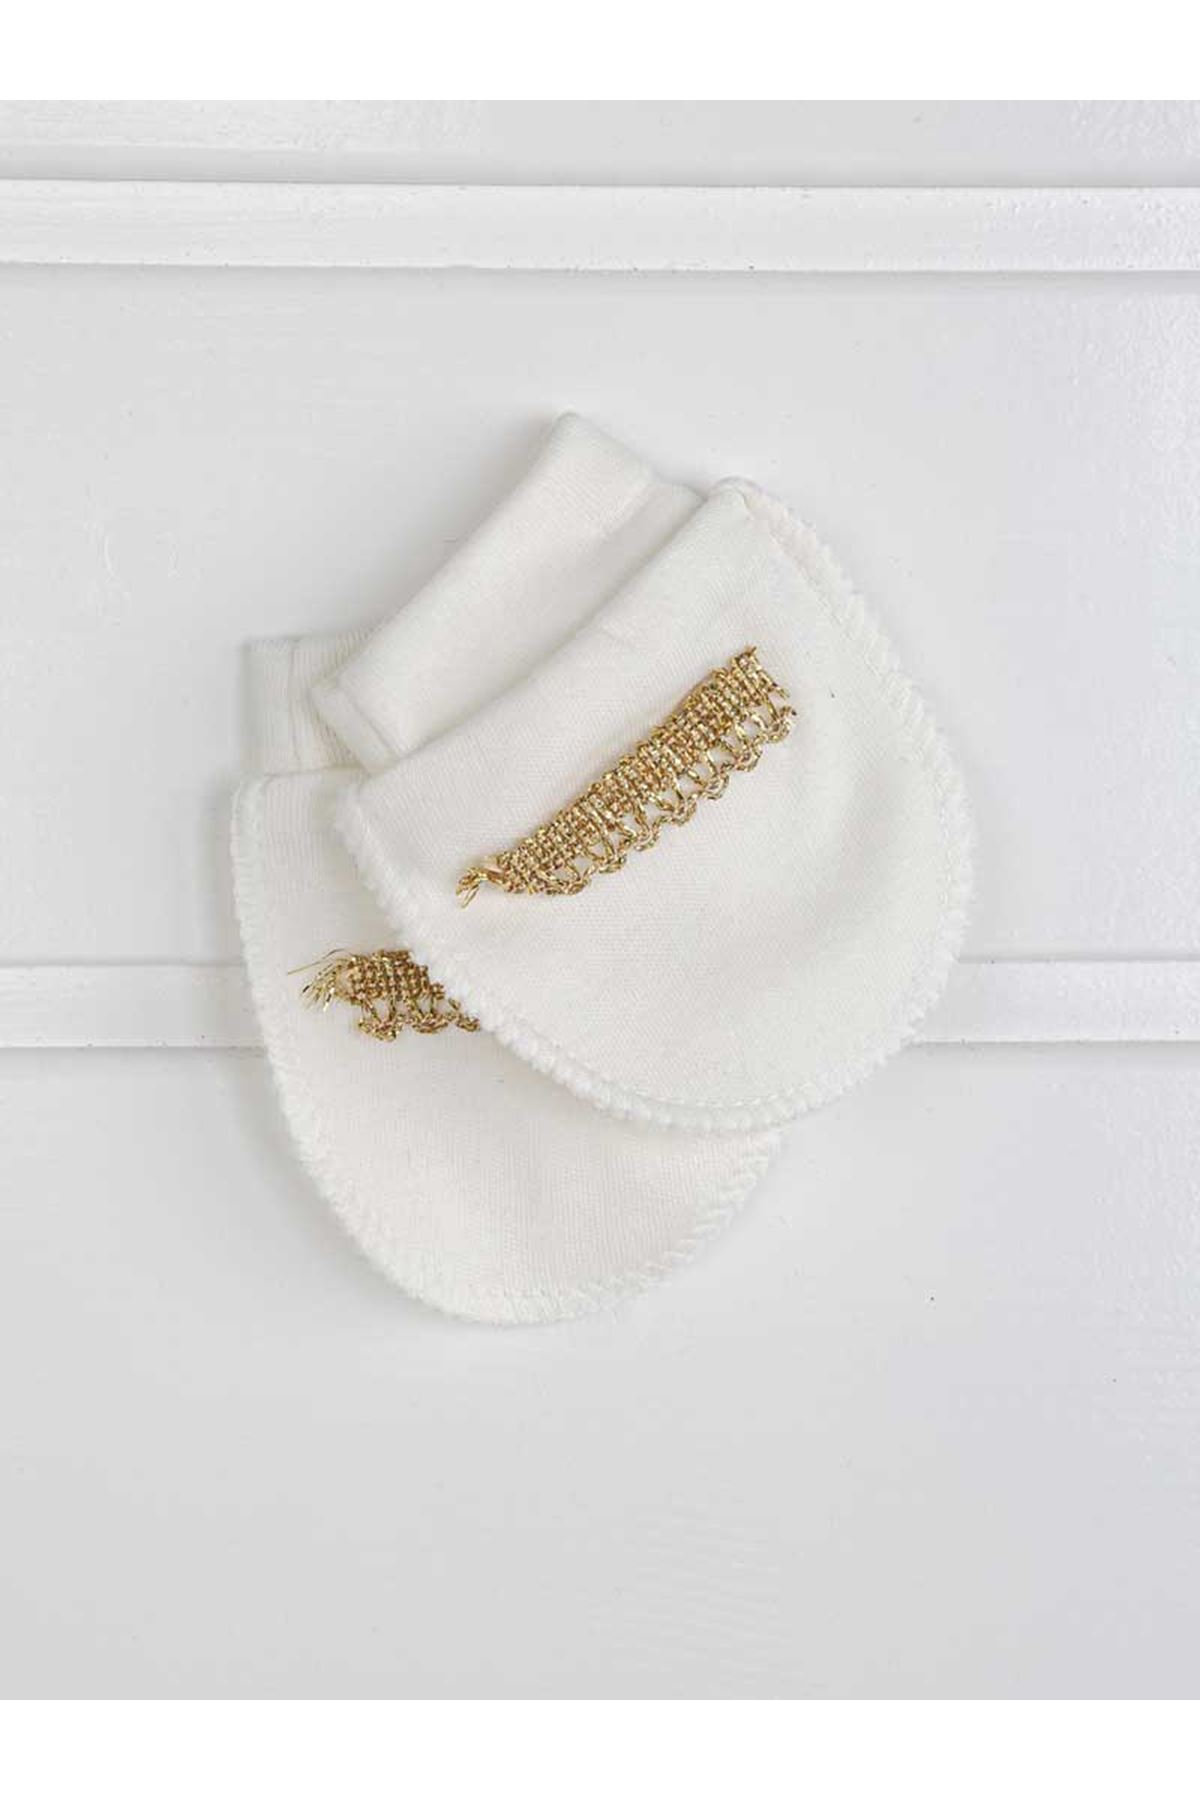 White Baby Rompers Suit Boy Ottoman Fez Newborn Clothes 4 pcs set cotton soft Boys clothing models for babies